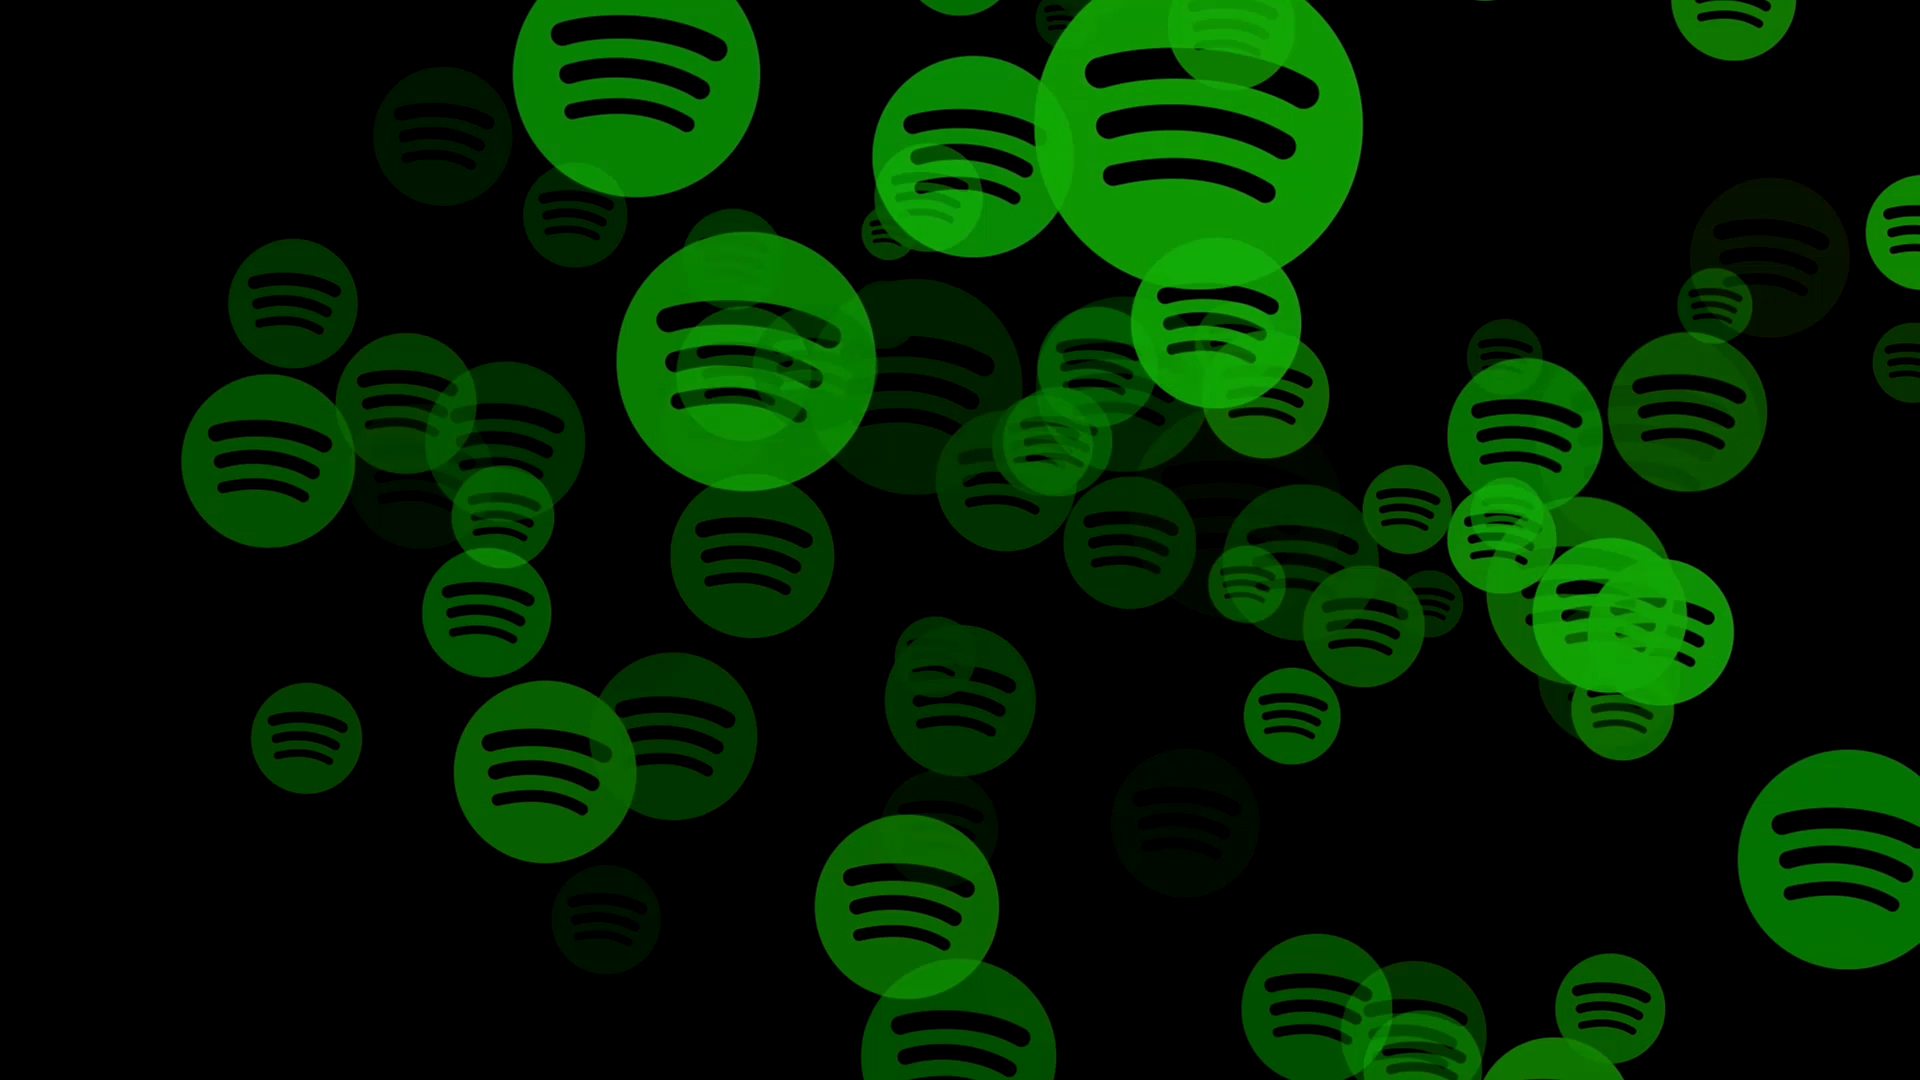 Abstract Spotify Desktop Wallpaper